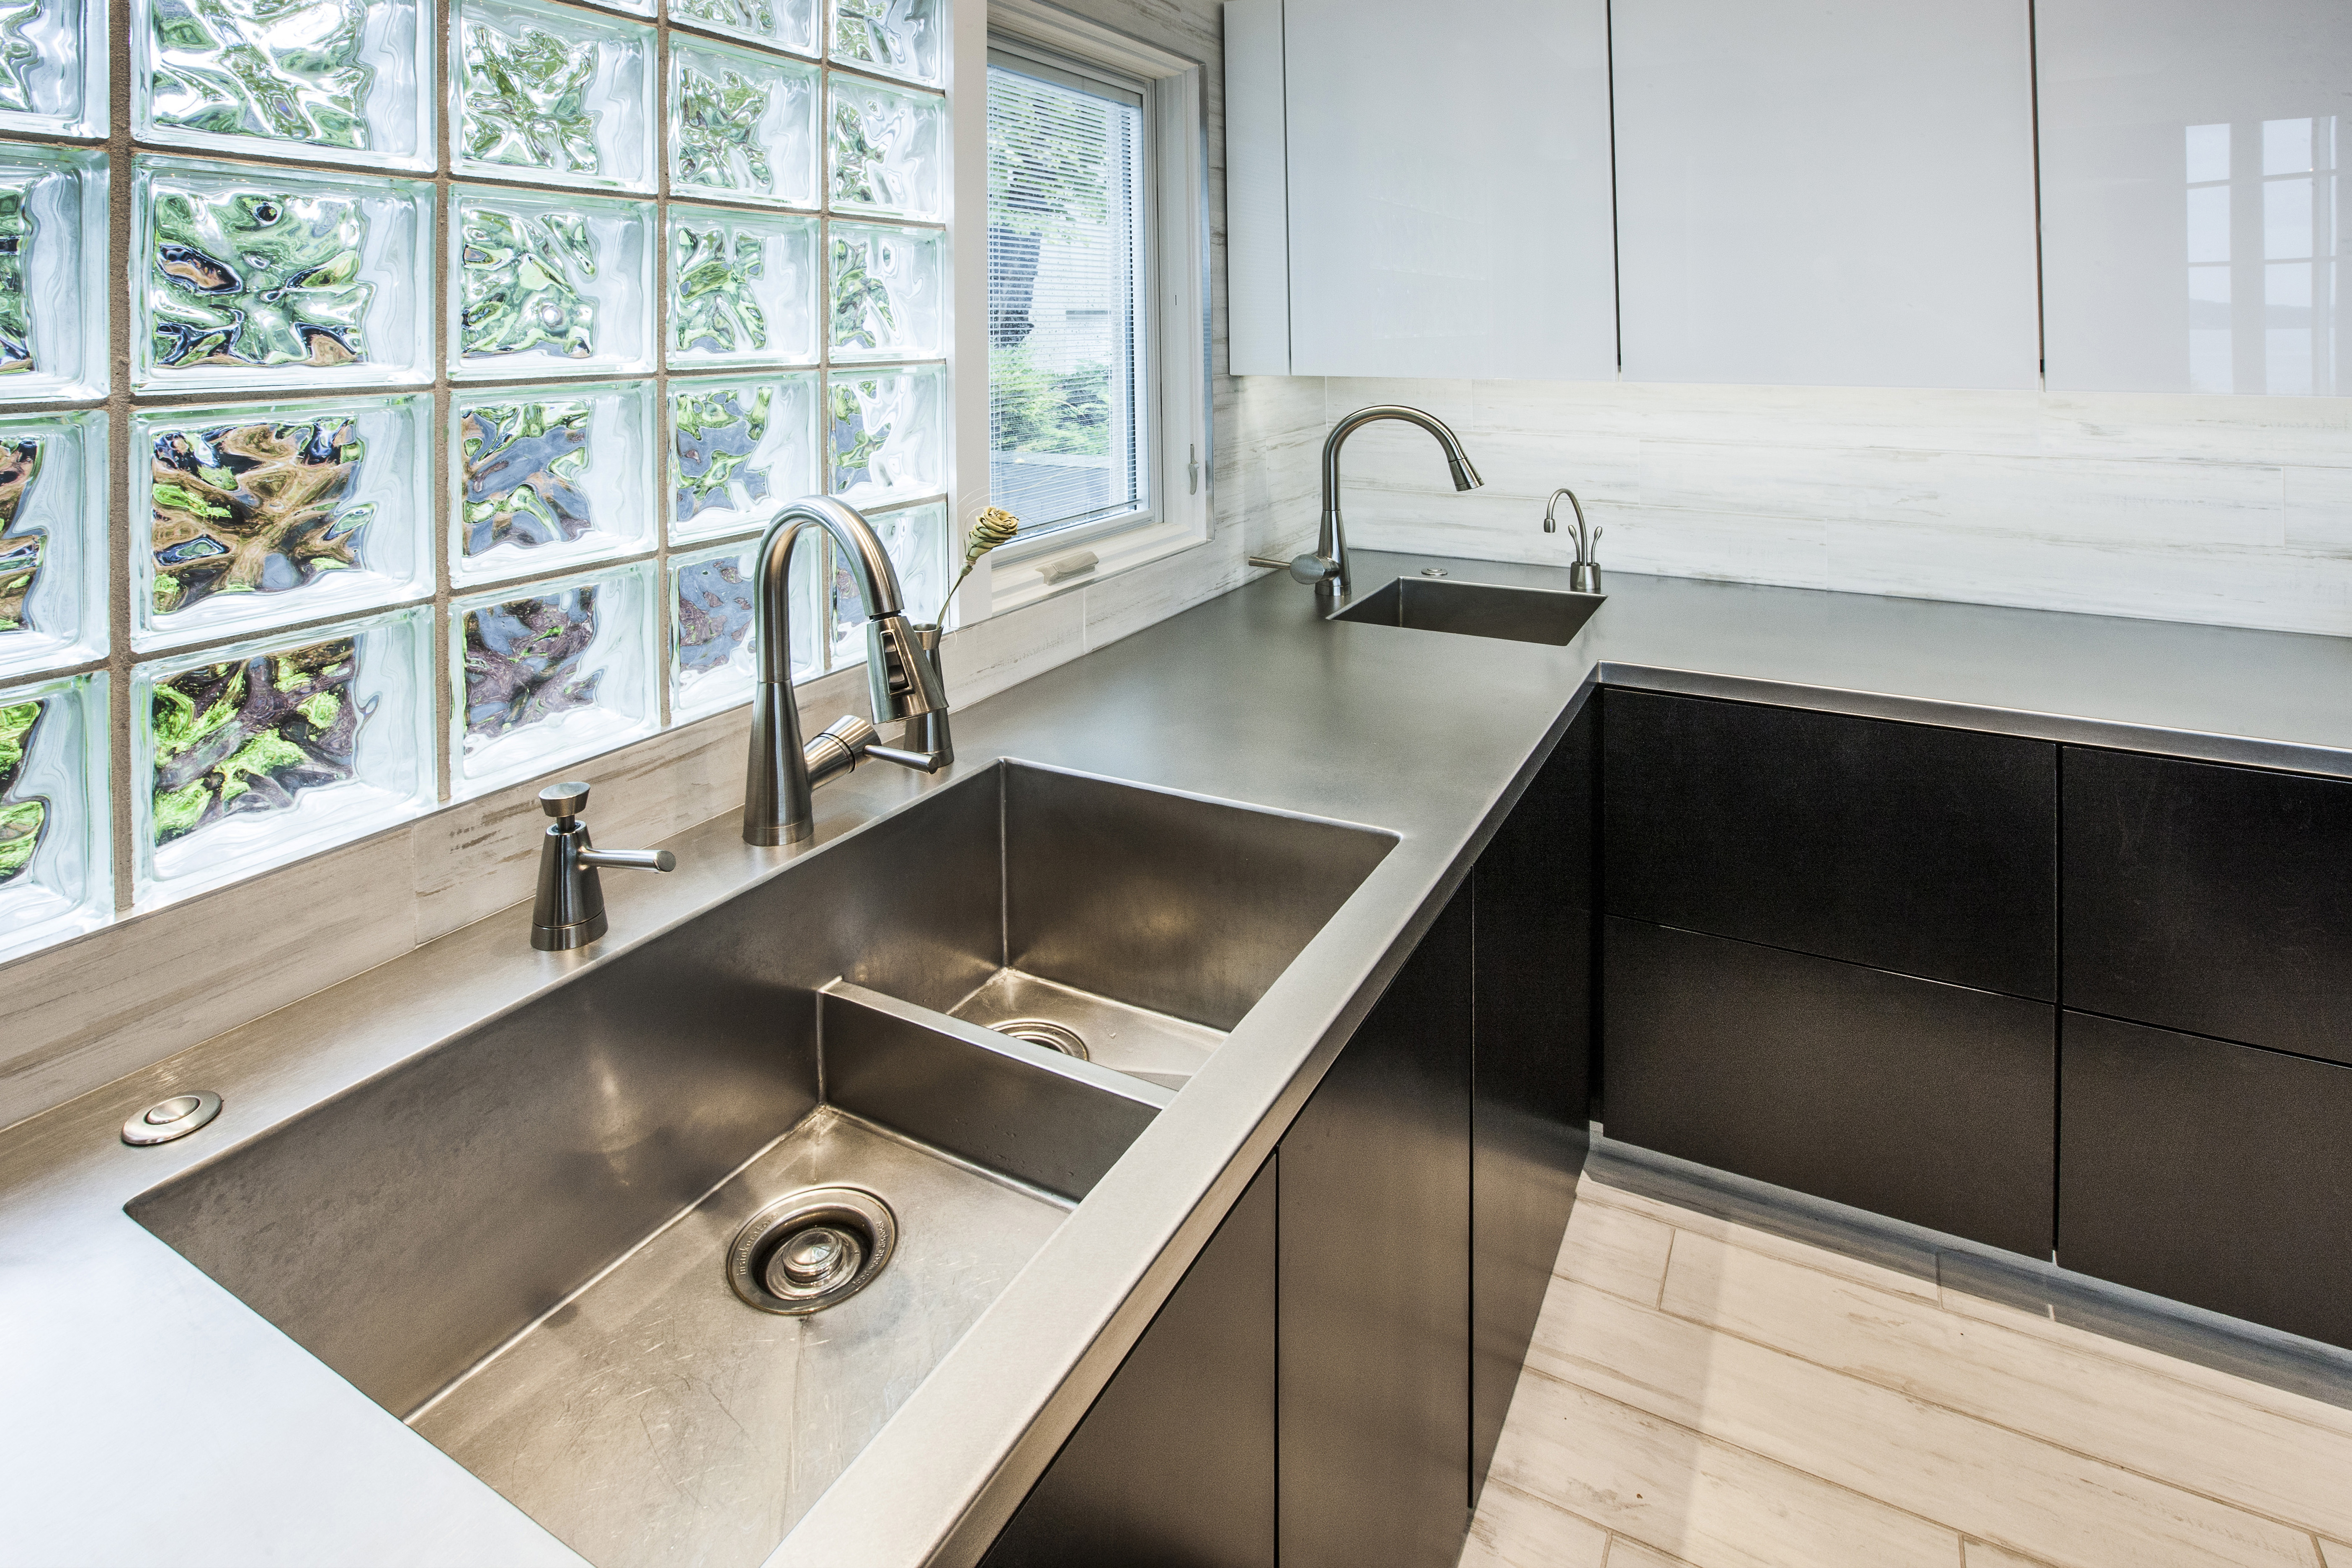 photo of zinc sinks in a kitchen